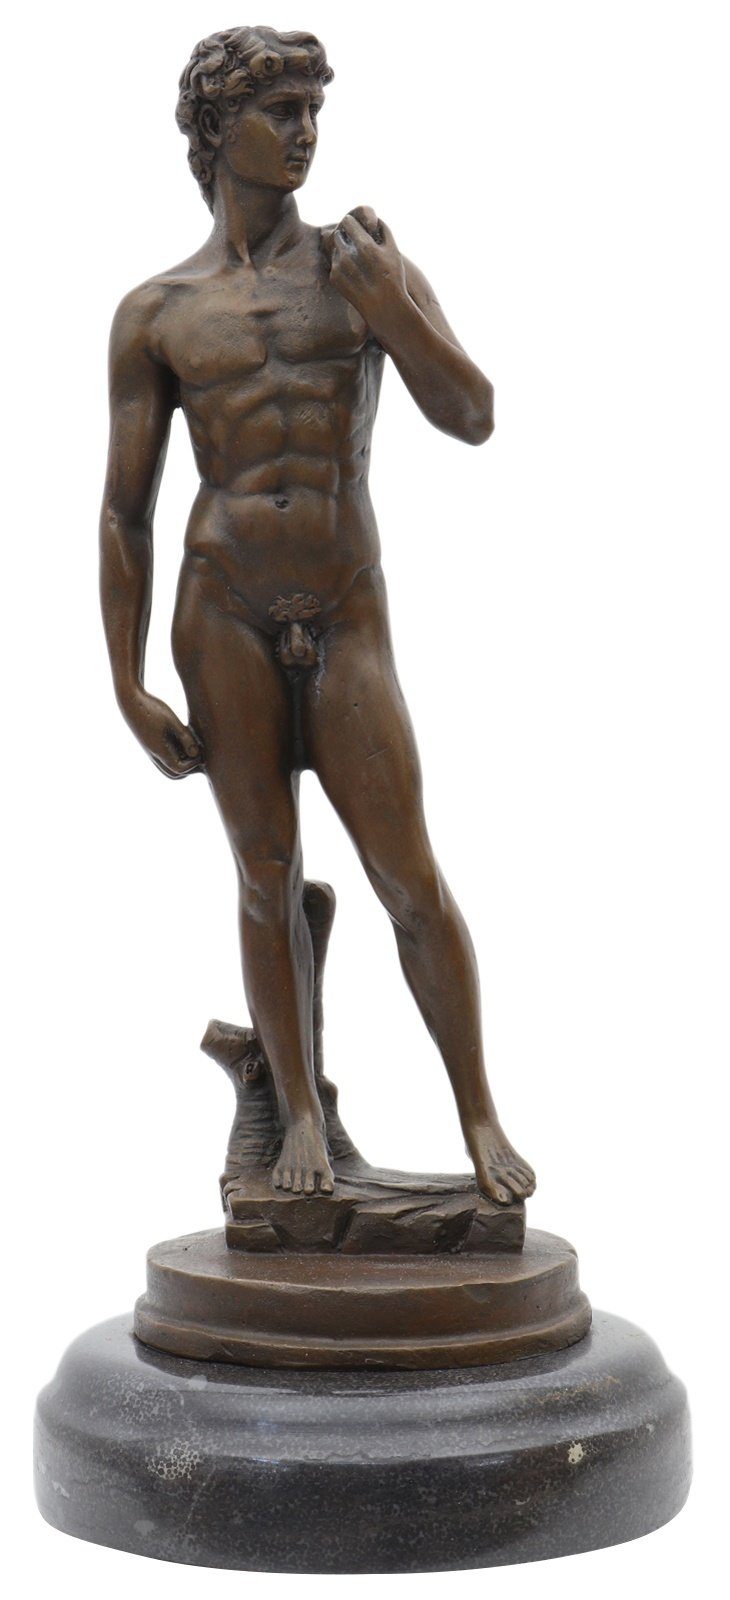 Aubaho Skulptur Bronzeskulptur David nach Michelangelo Figur Mythologie Antik-Stil Rep